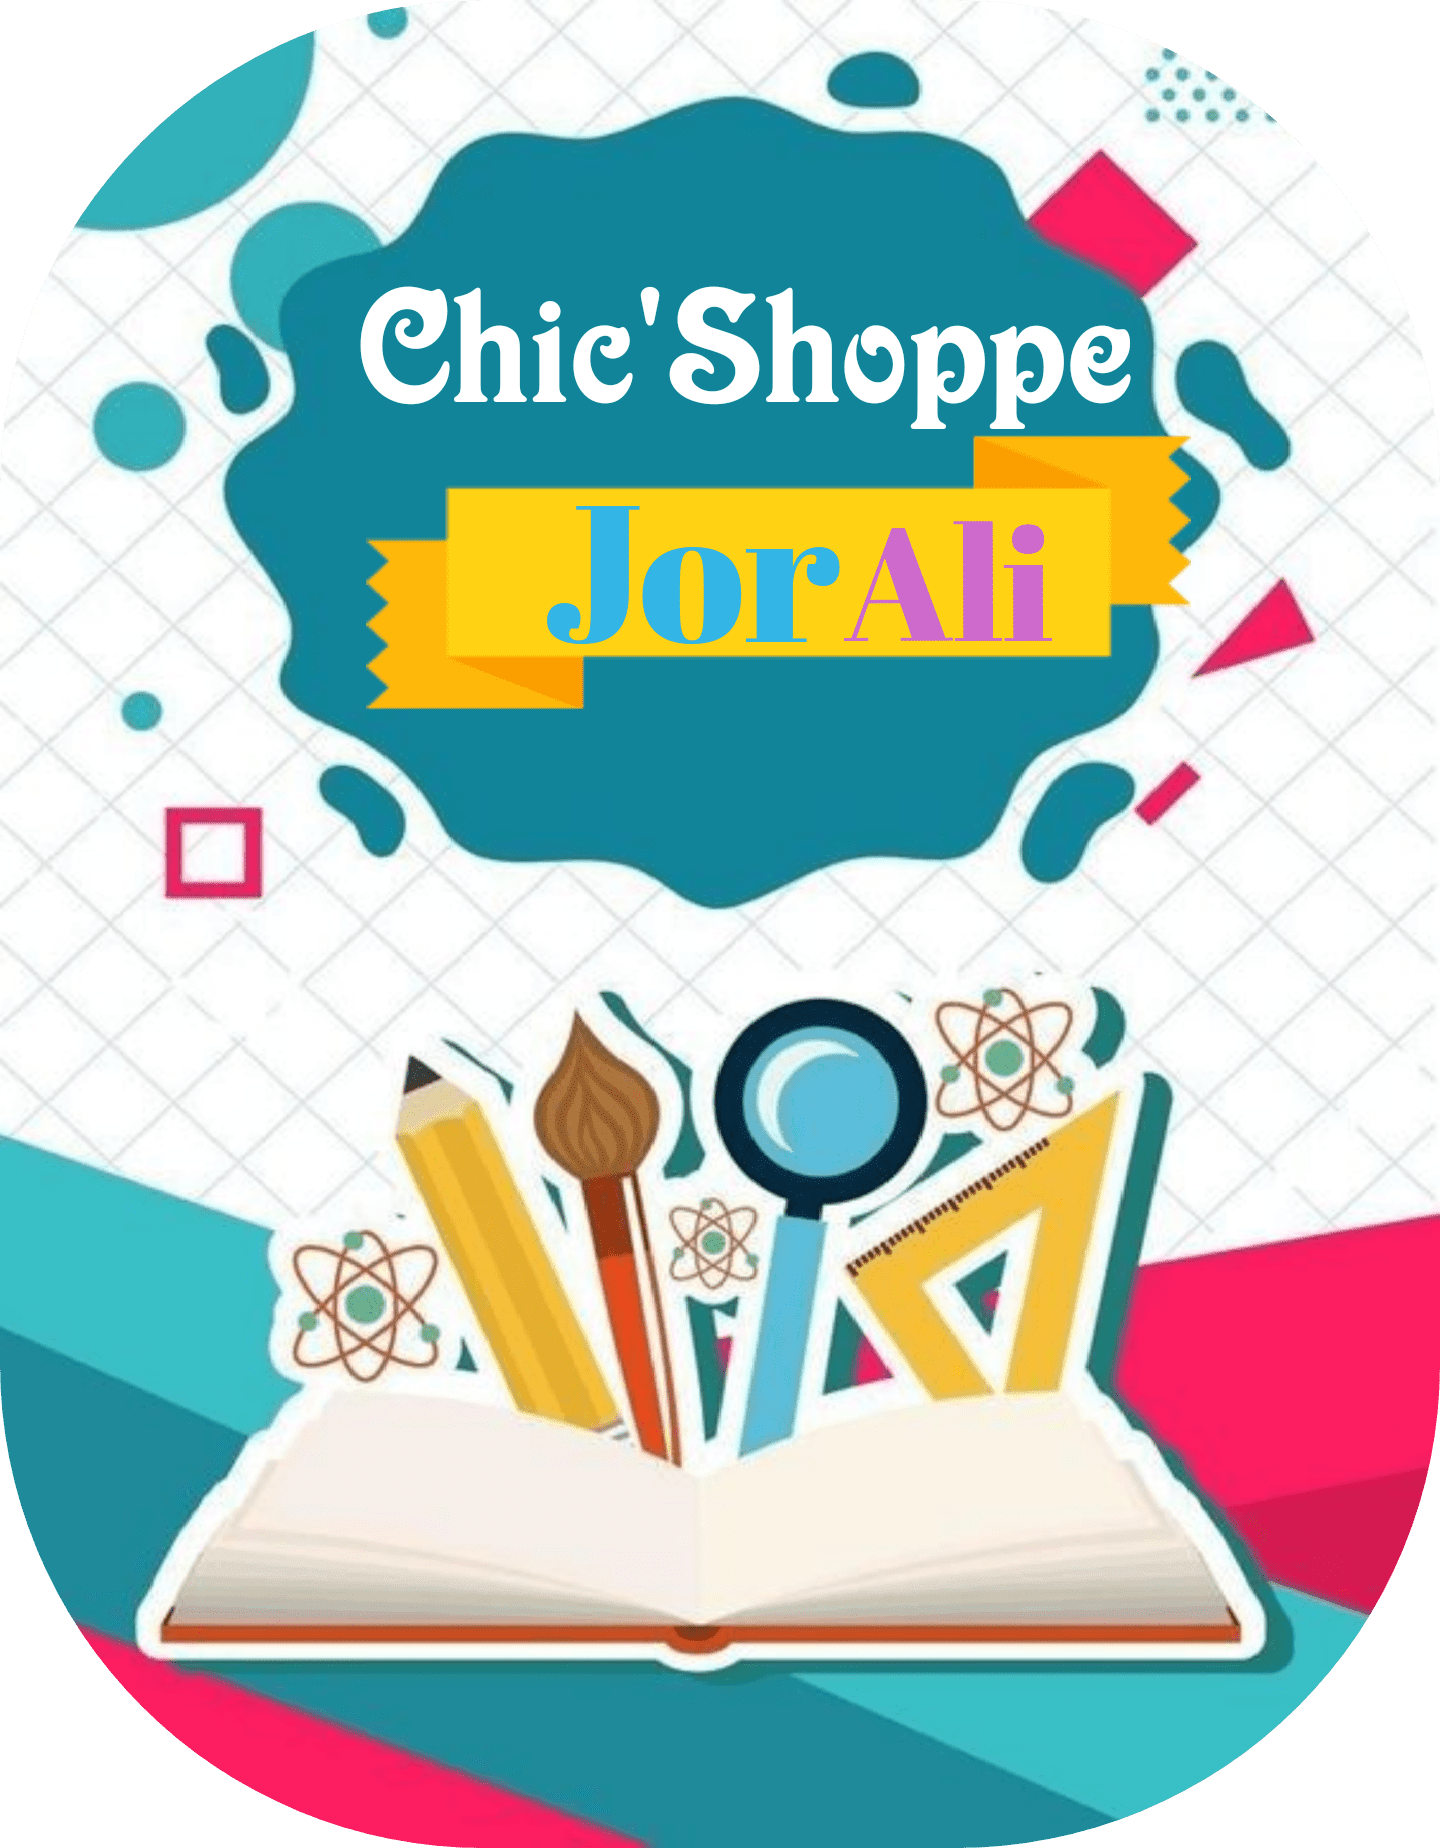 Chic' Shoppe Jorali